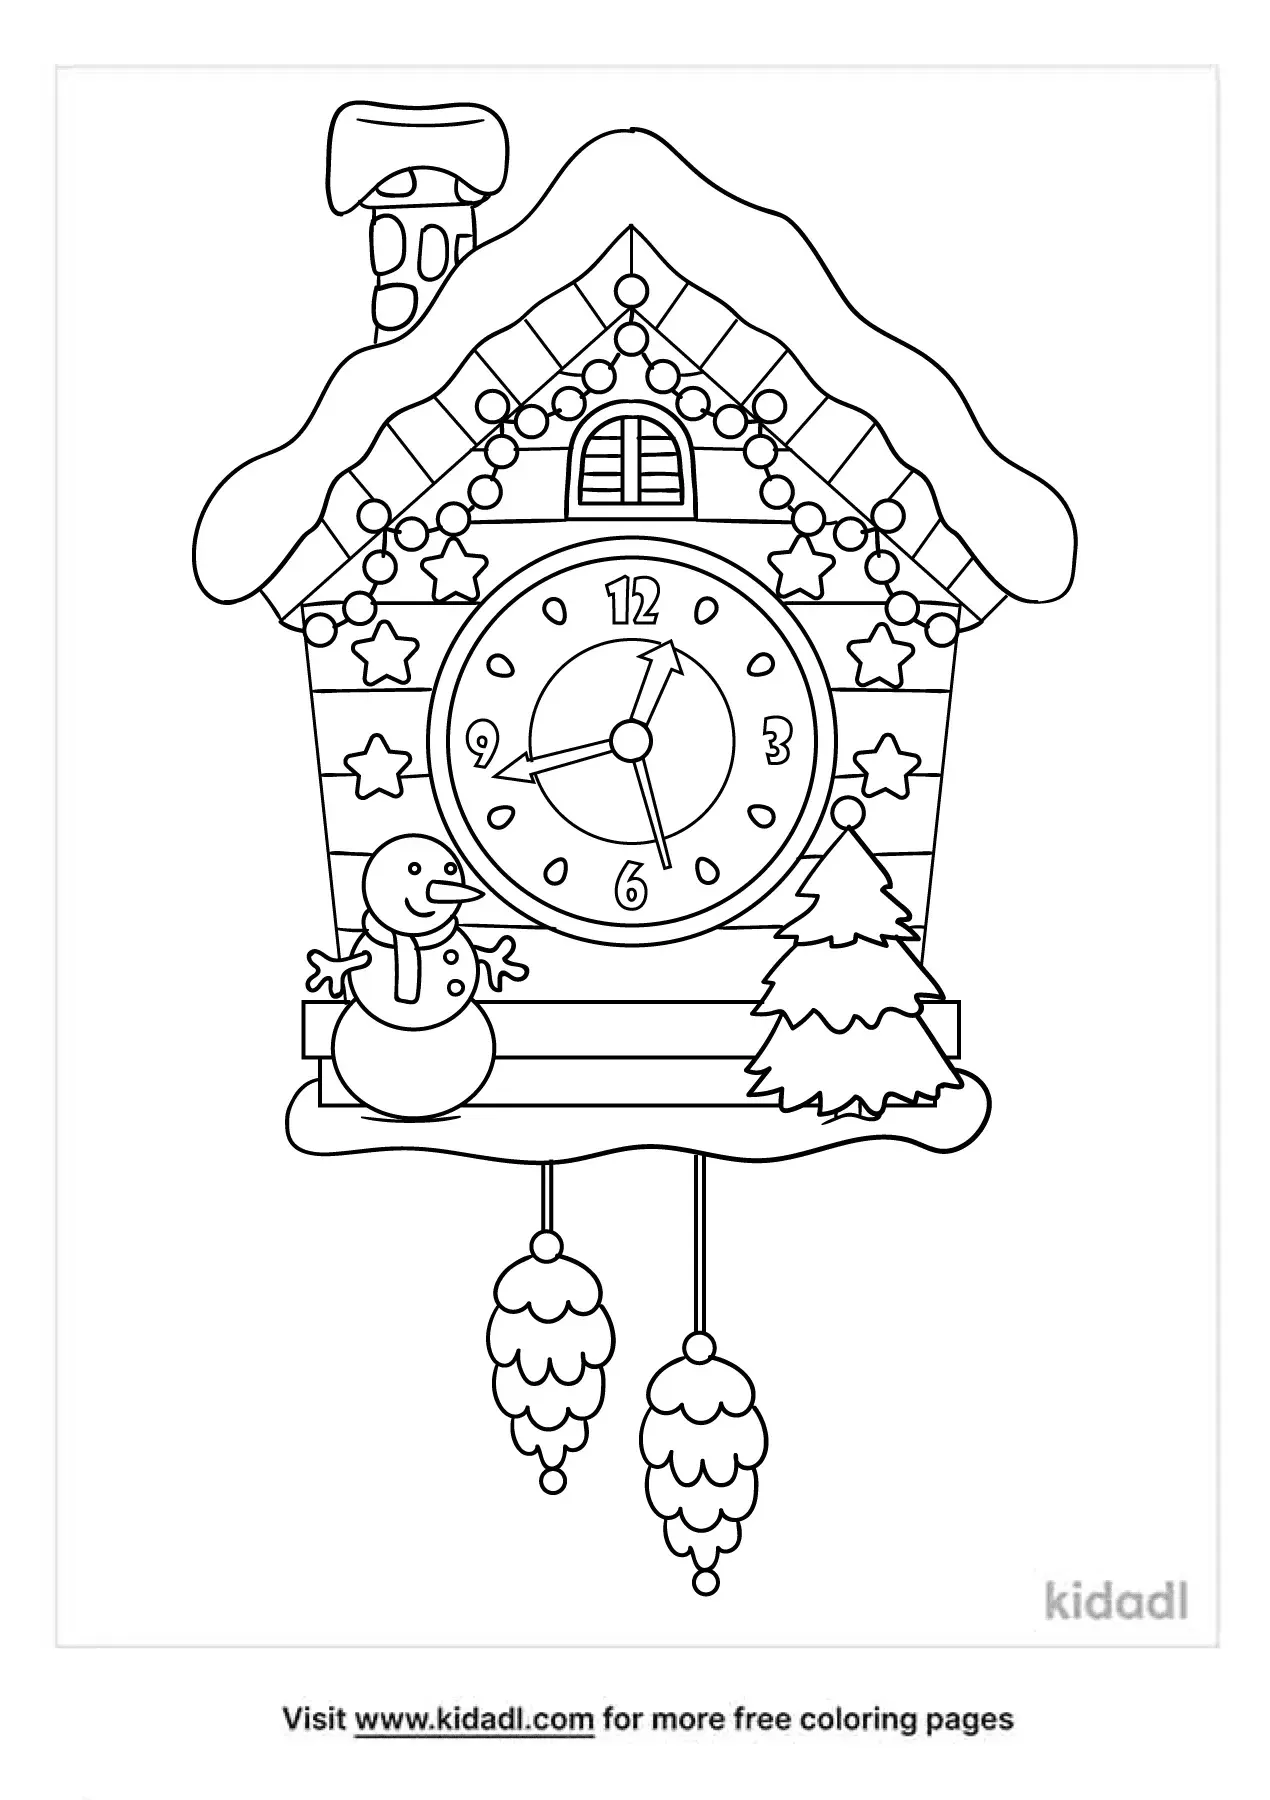 Free Clock Coloring Page | Coloring Page Printables | Kidadl